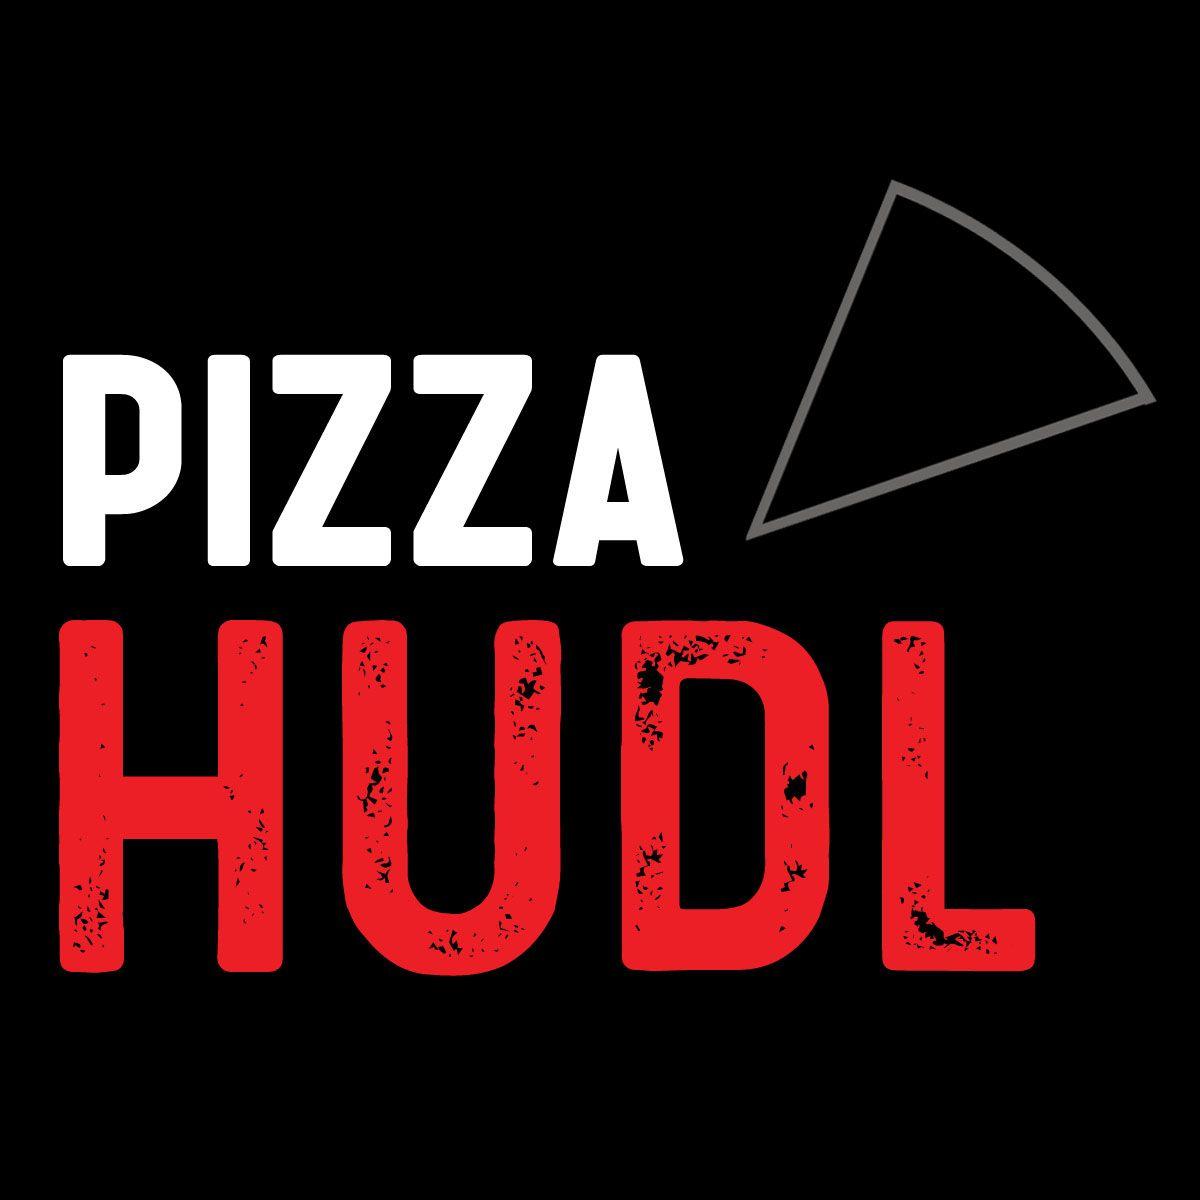 Red Triangle Restaurant Logo - Conservative, Bold, Restaurant Logo Design for PIZZAHUDL by hcjvn86 ...